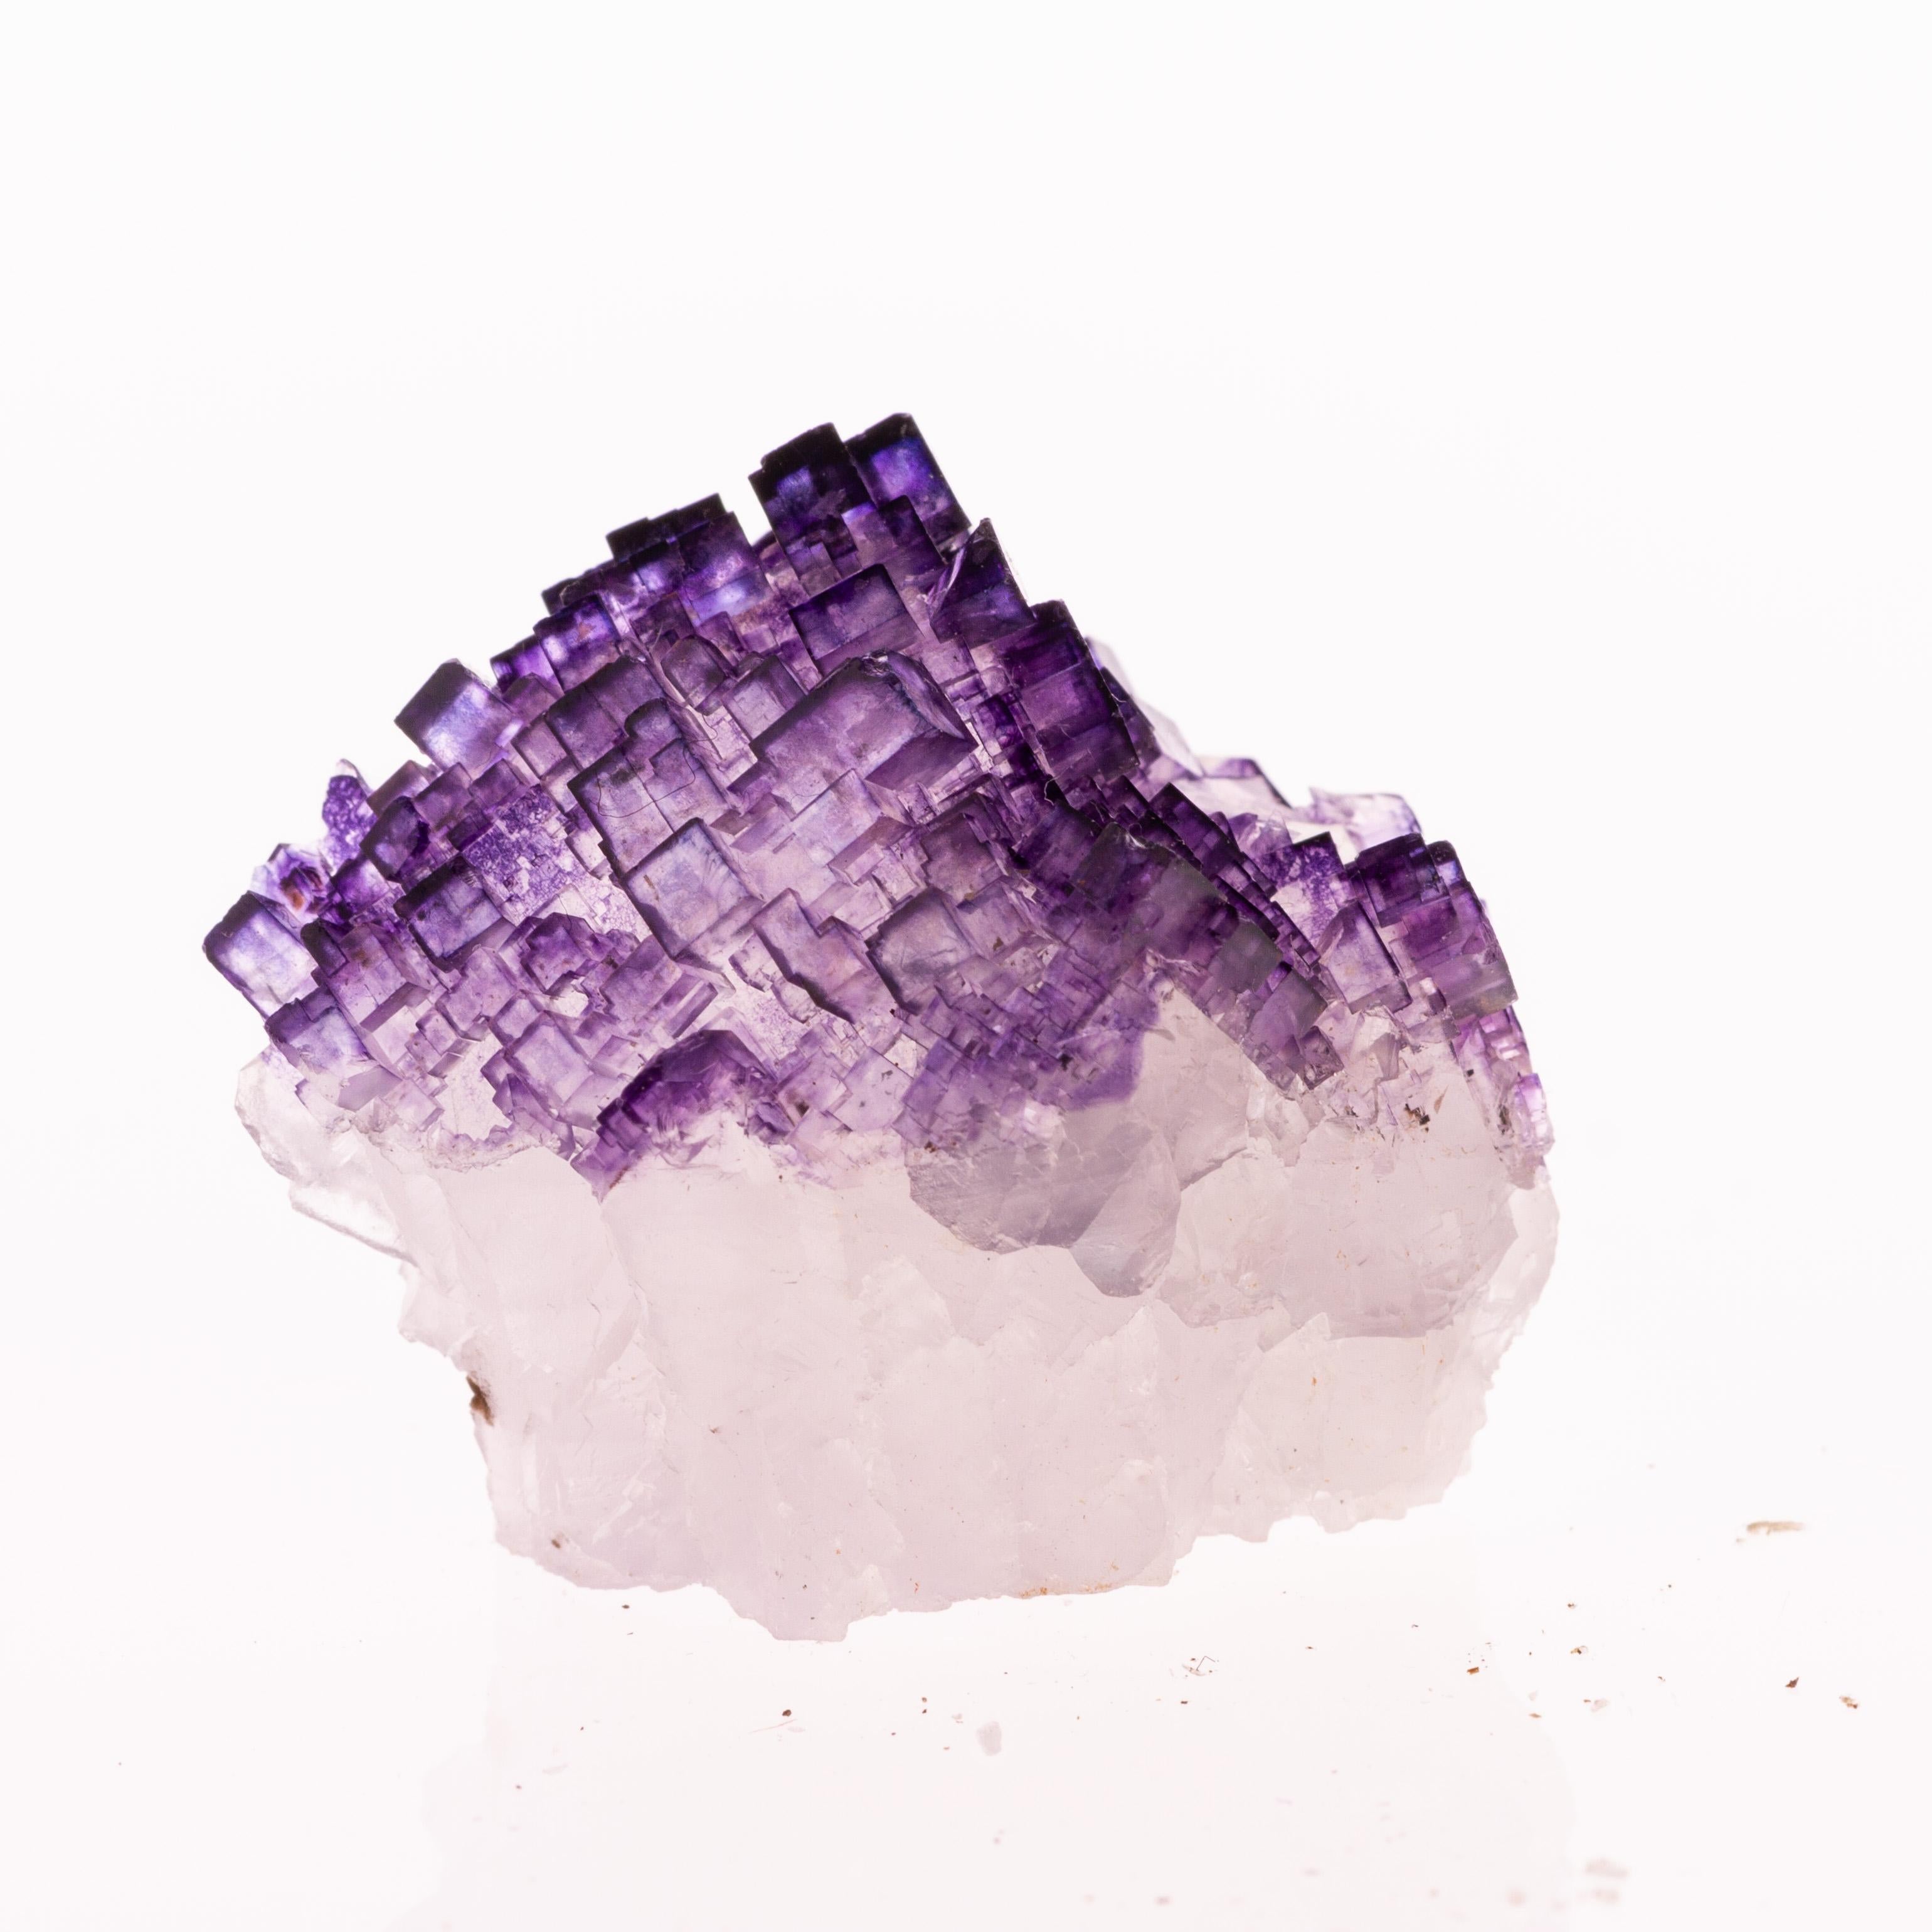 20th Century Natural History - Mexican Fluorite Gemstone Geode Specimen Crystals Cluster